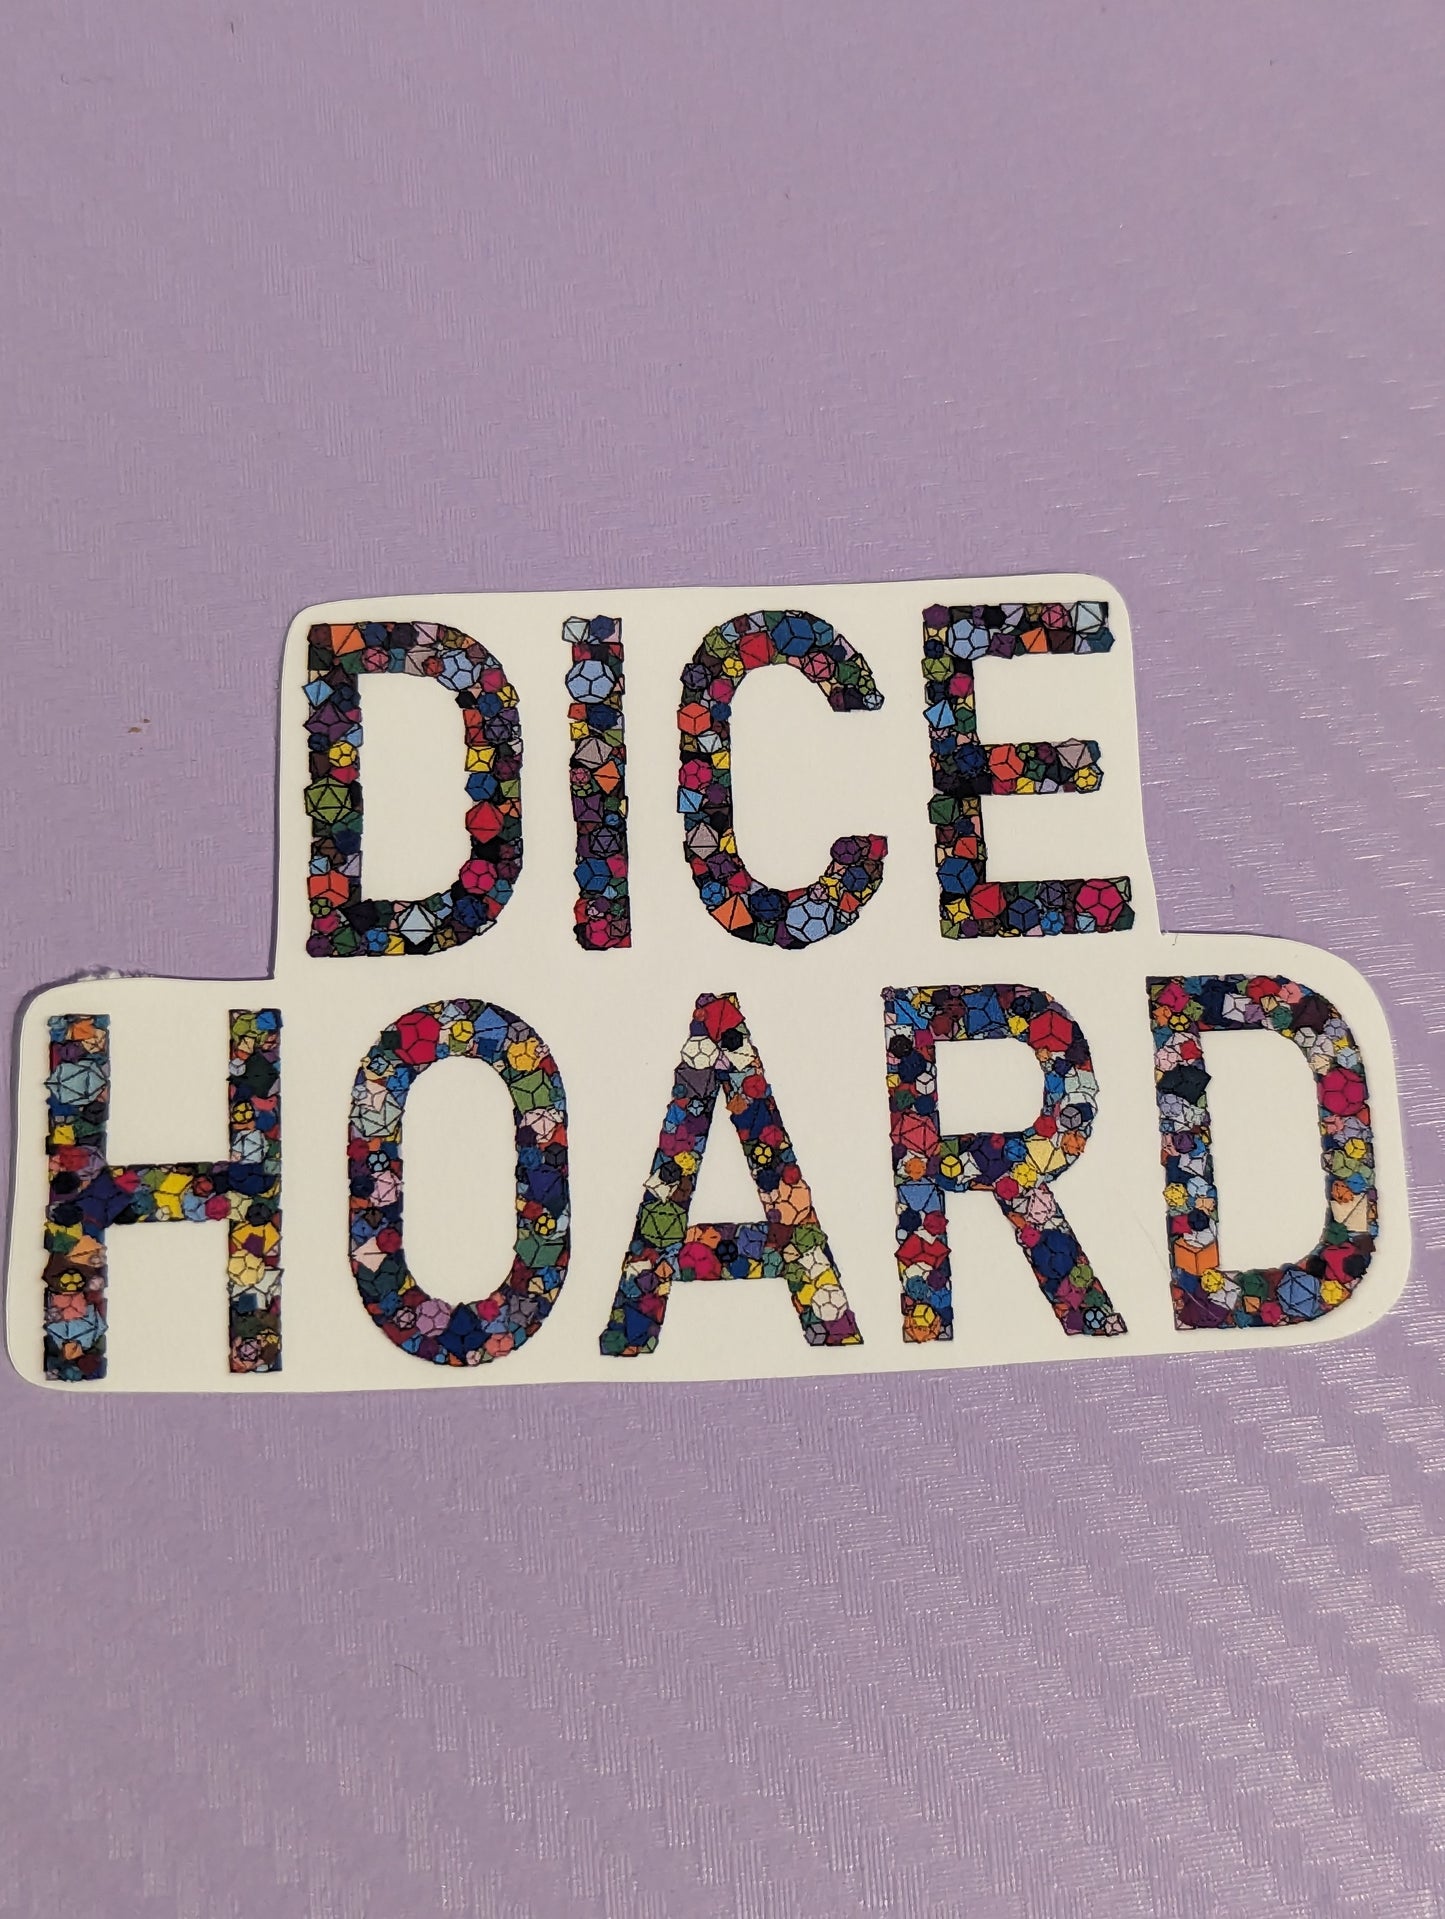 Dice Hoard Dnd Sticker Decor Decorative